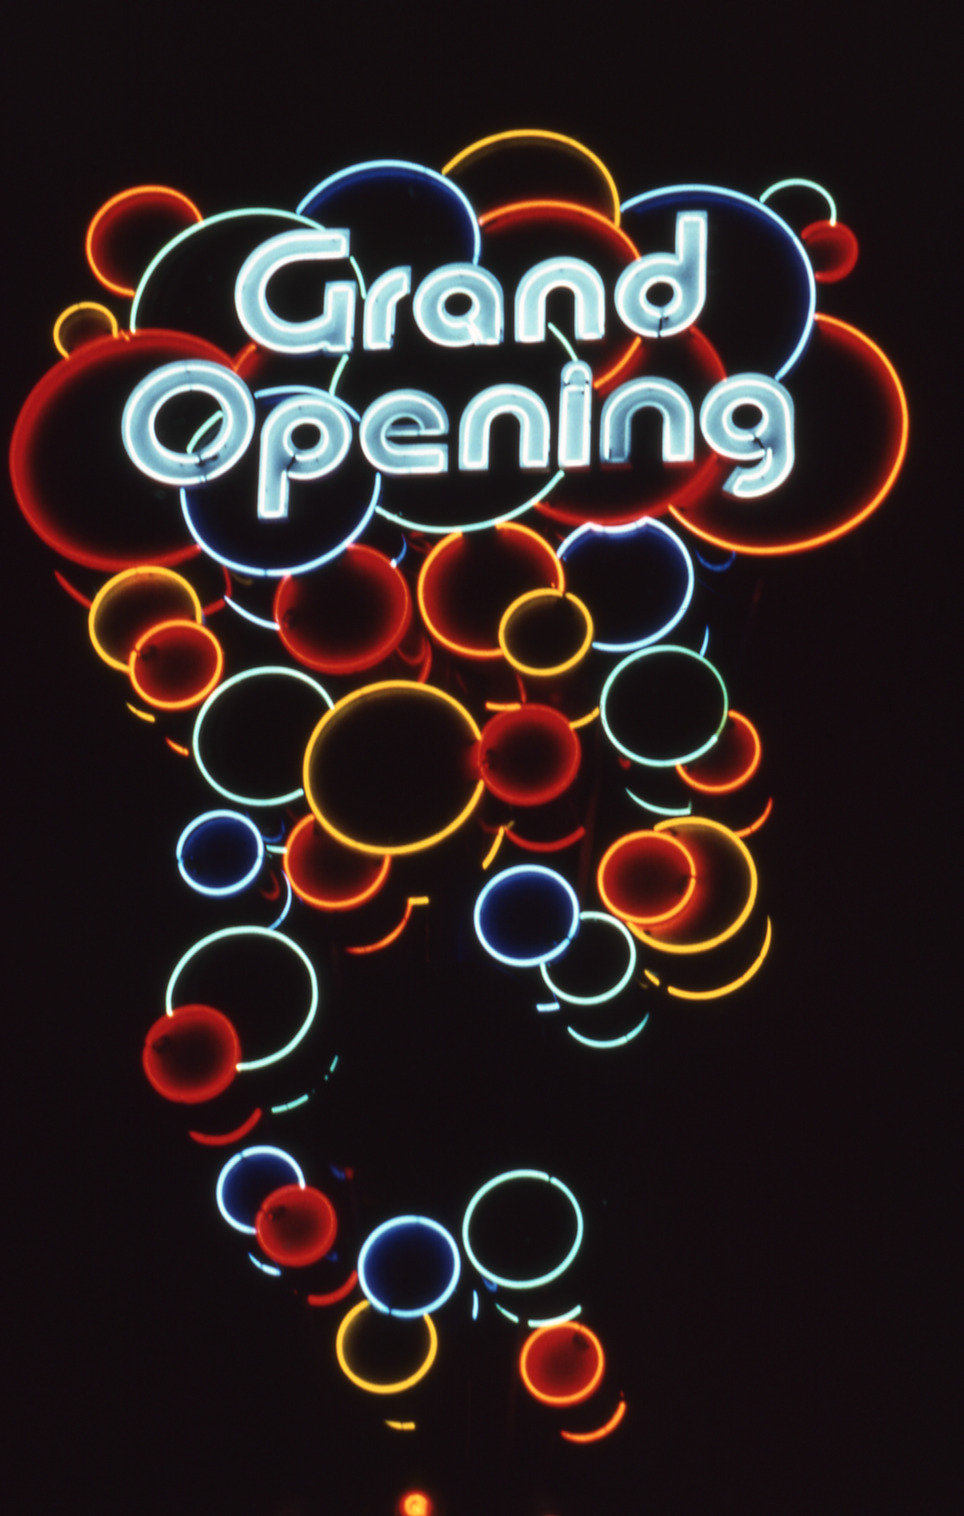 Grand Opening sign, Las Vegas, Nevada: photographic print